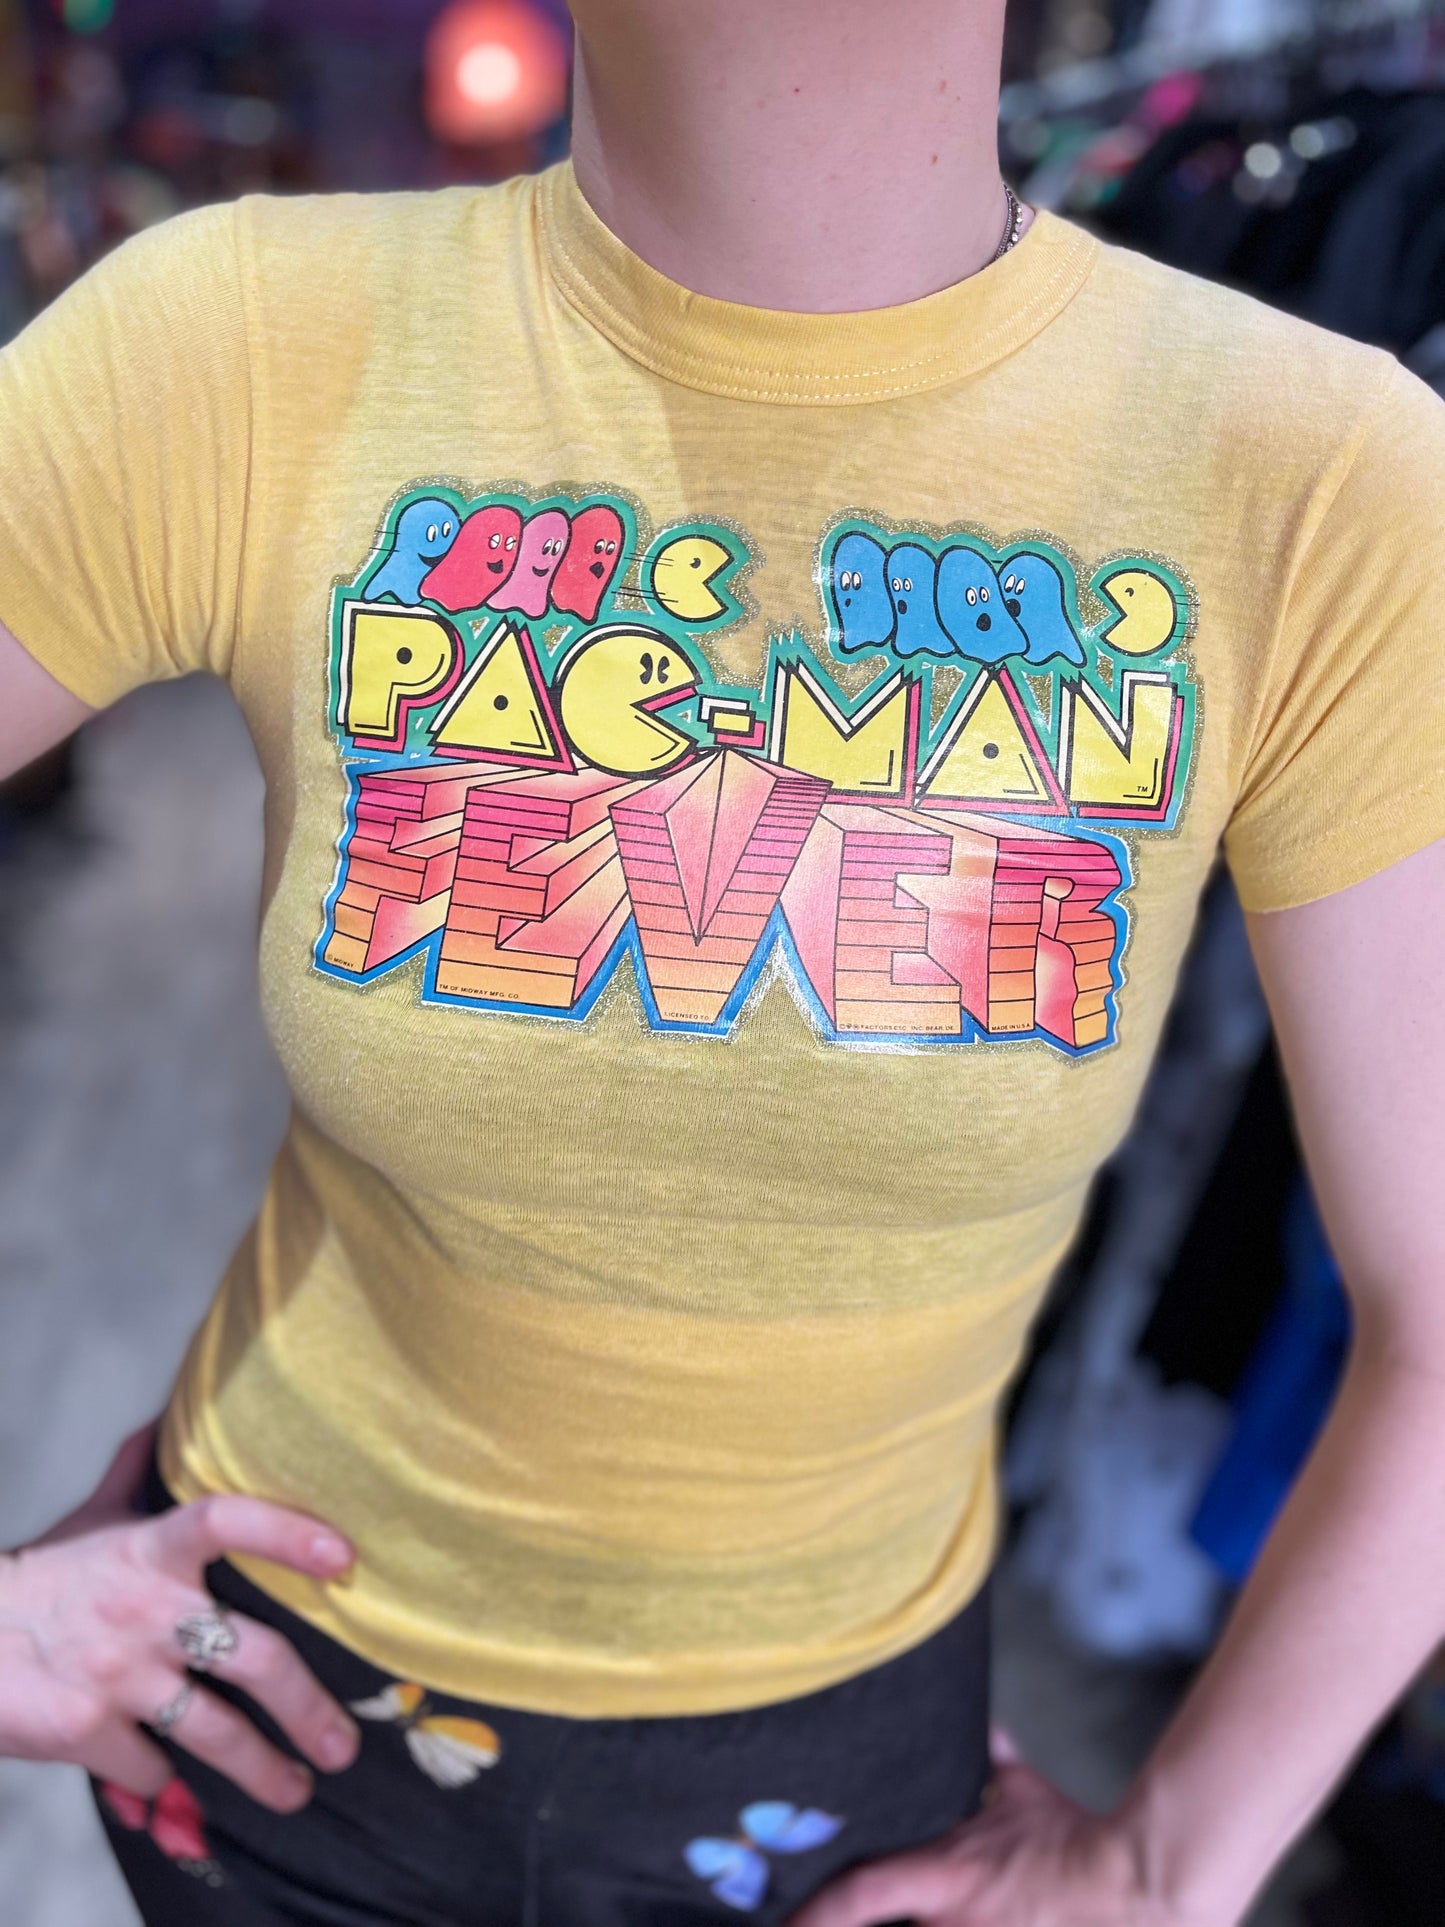 Vintage 80s Pac Man Fever T-shirt - Spark Pretty